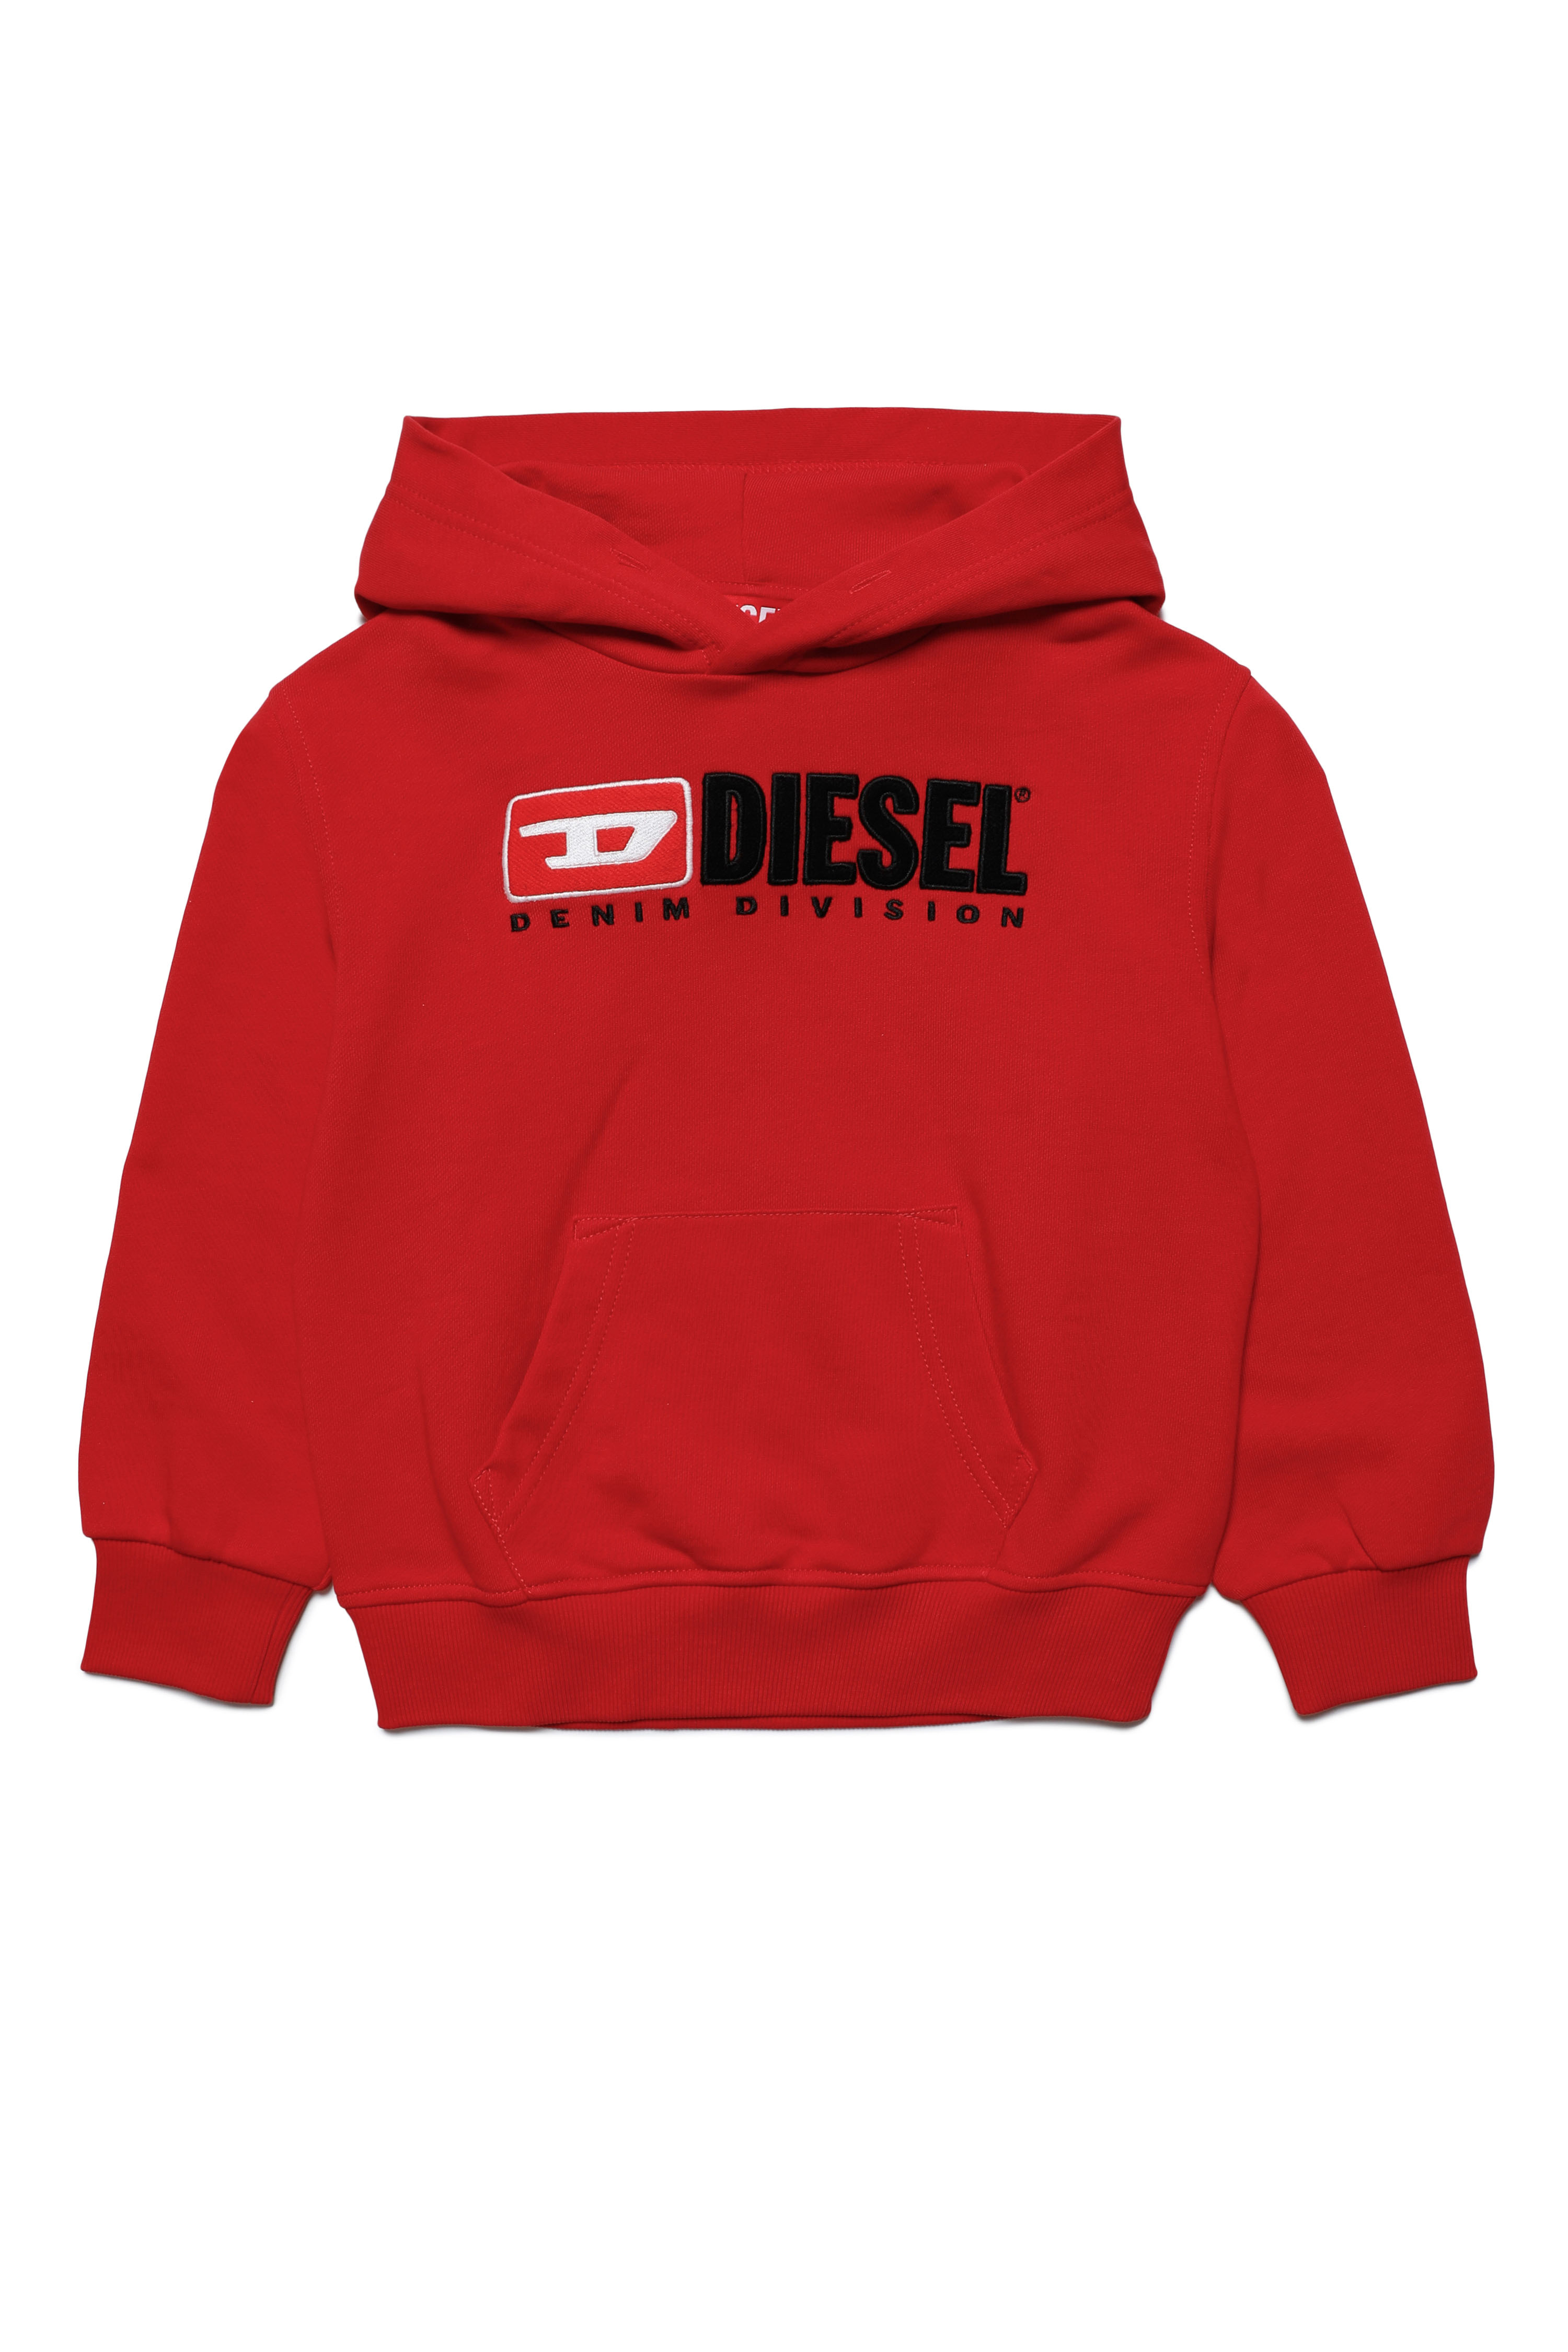 Diesel - SGINNDIVE OVER, Rojo - Image 1